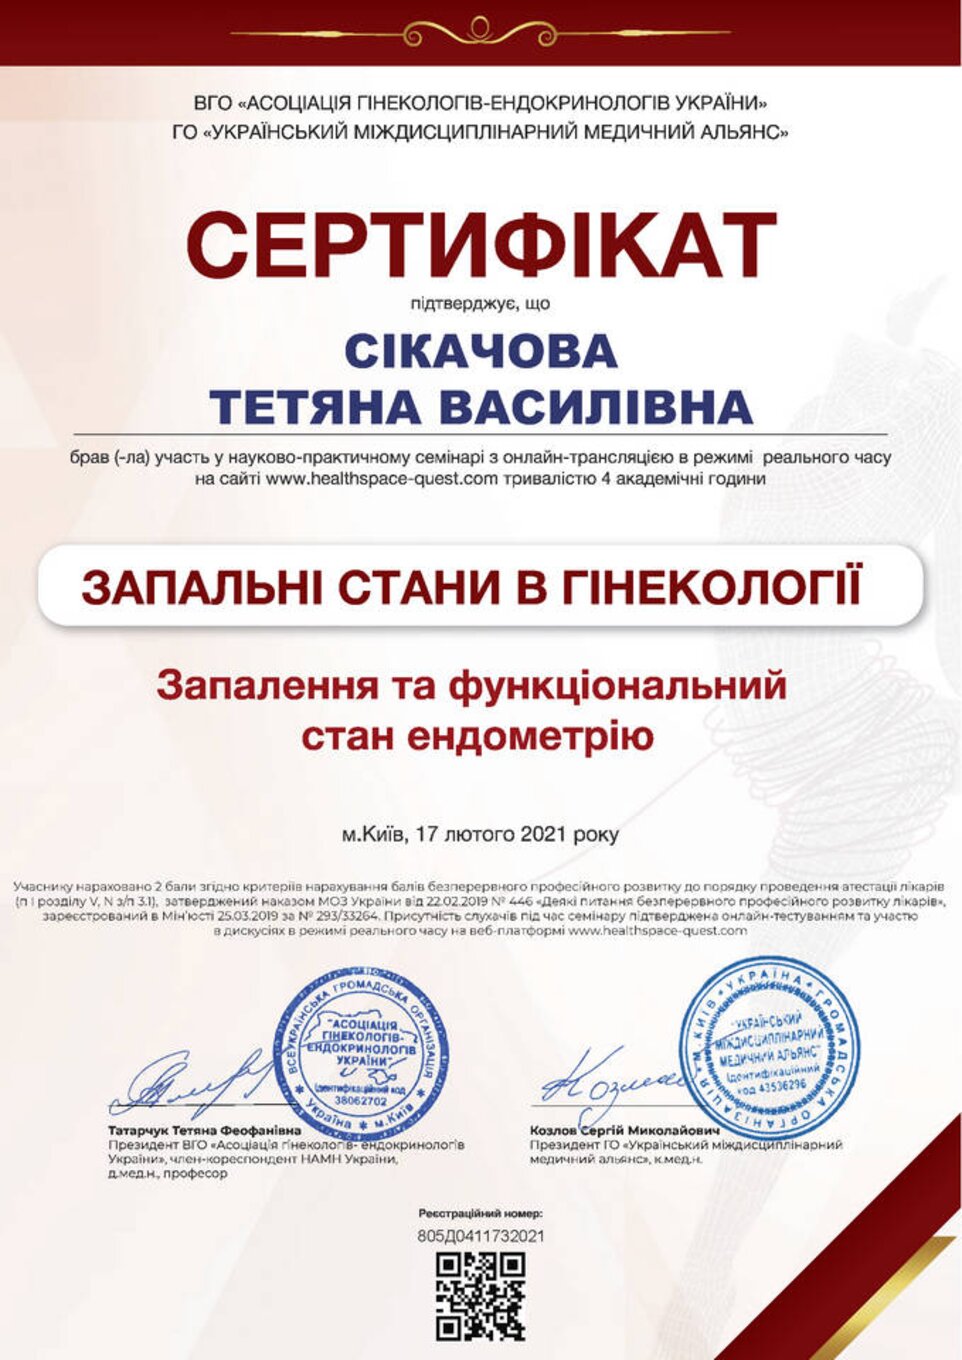 certificates/cikachova-tetyana-vasilivna/erc-sikacheva-cert-24.jpg